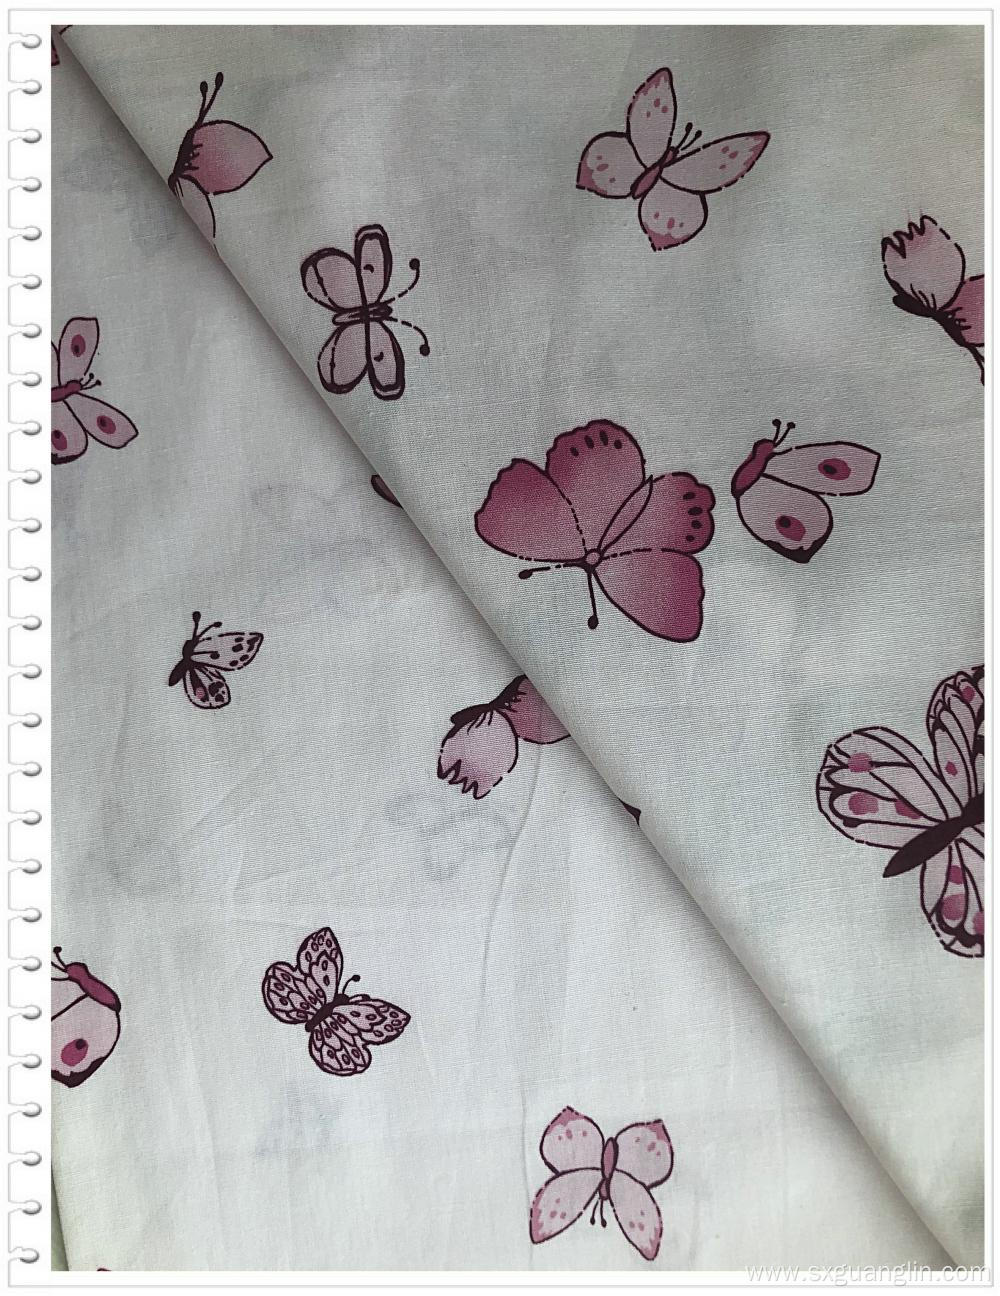 Cotton Poplin Spandex Fabric For Layds